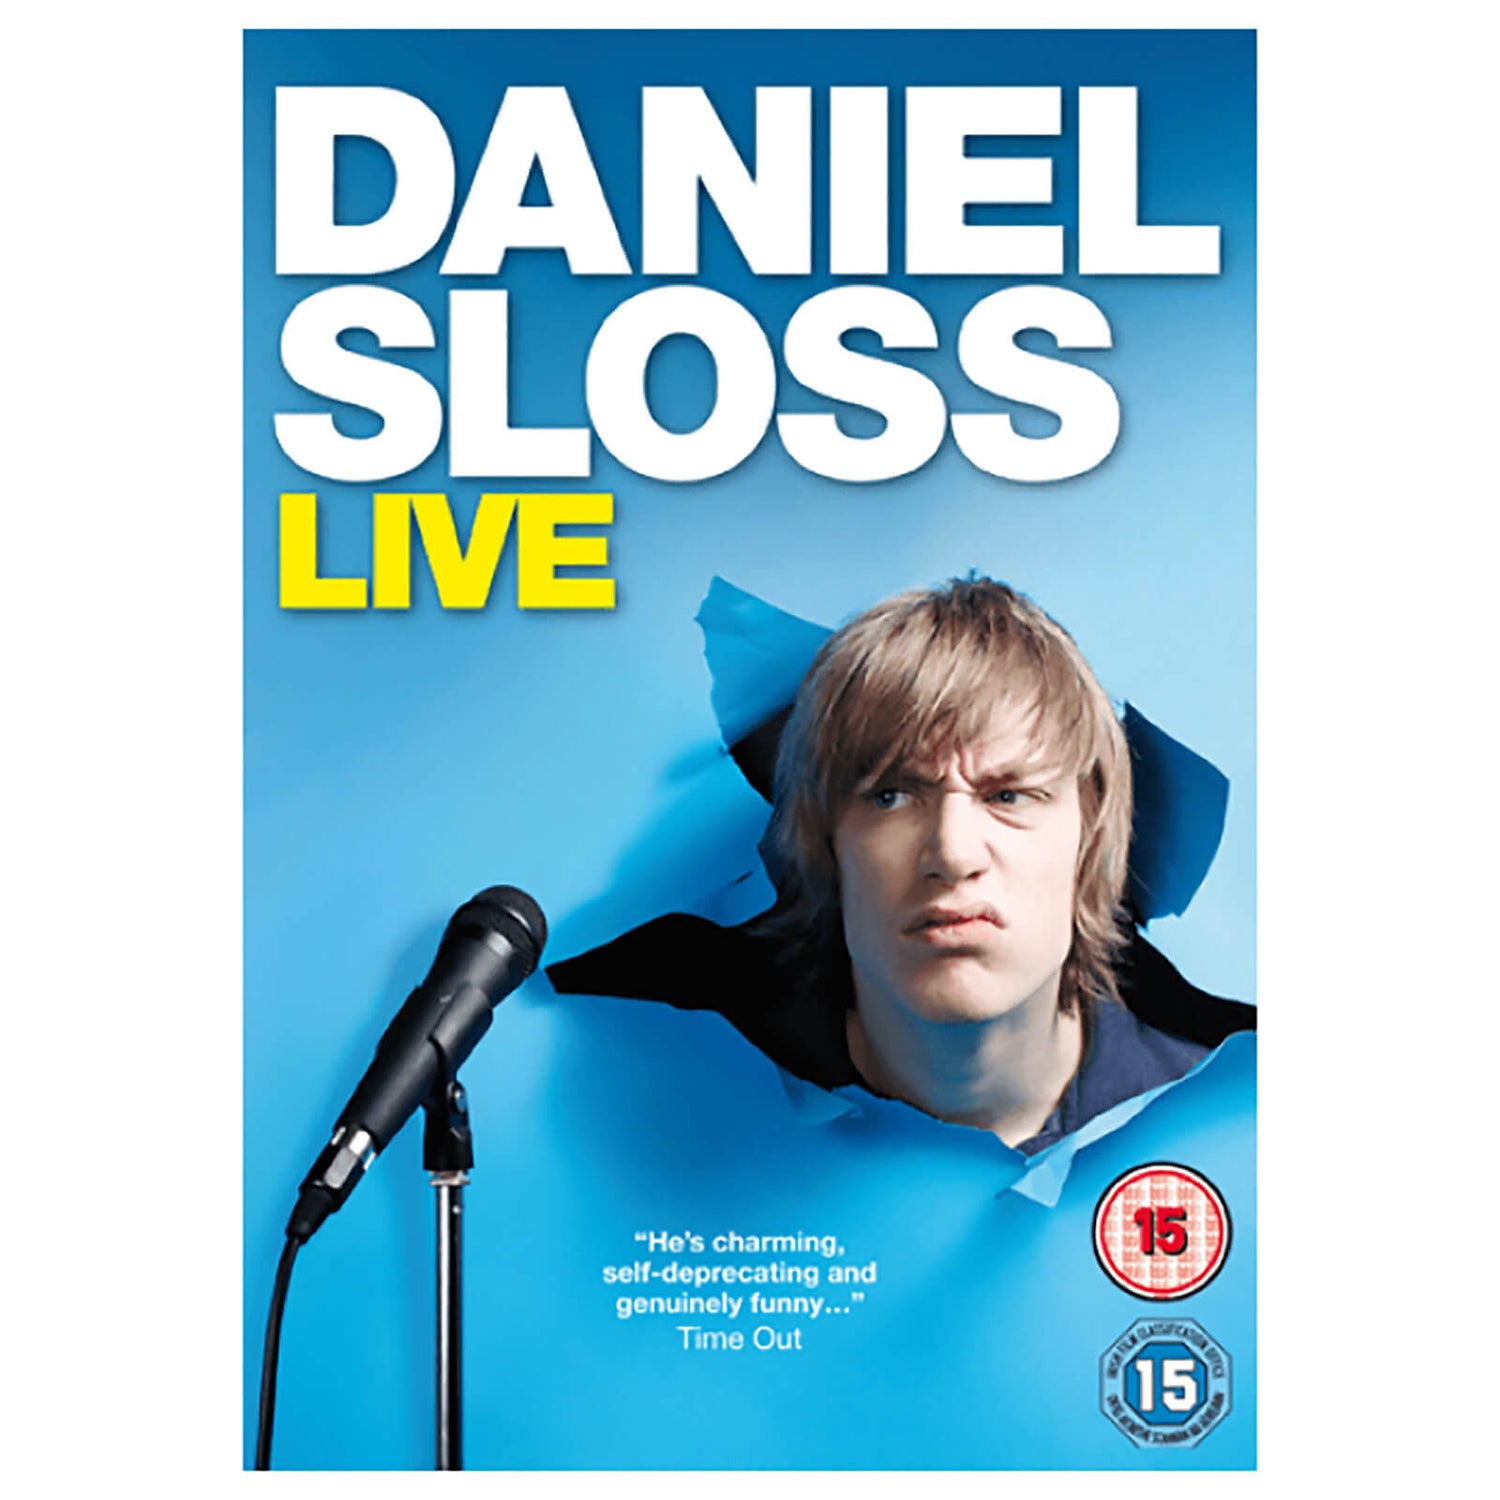 Daniel Sloss Live